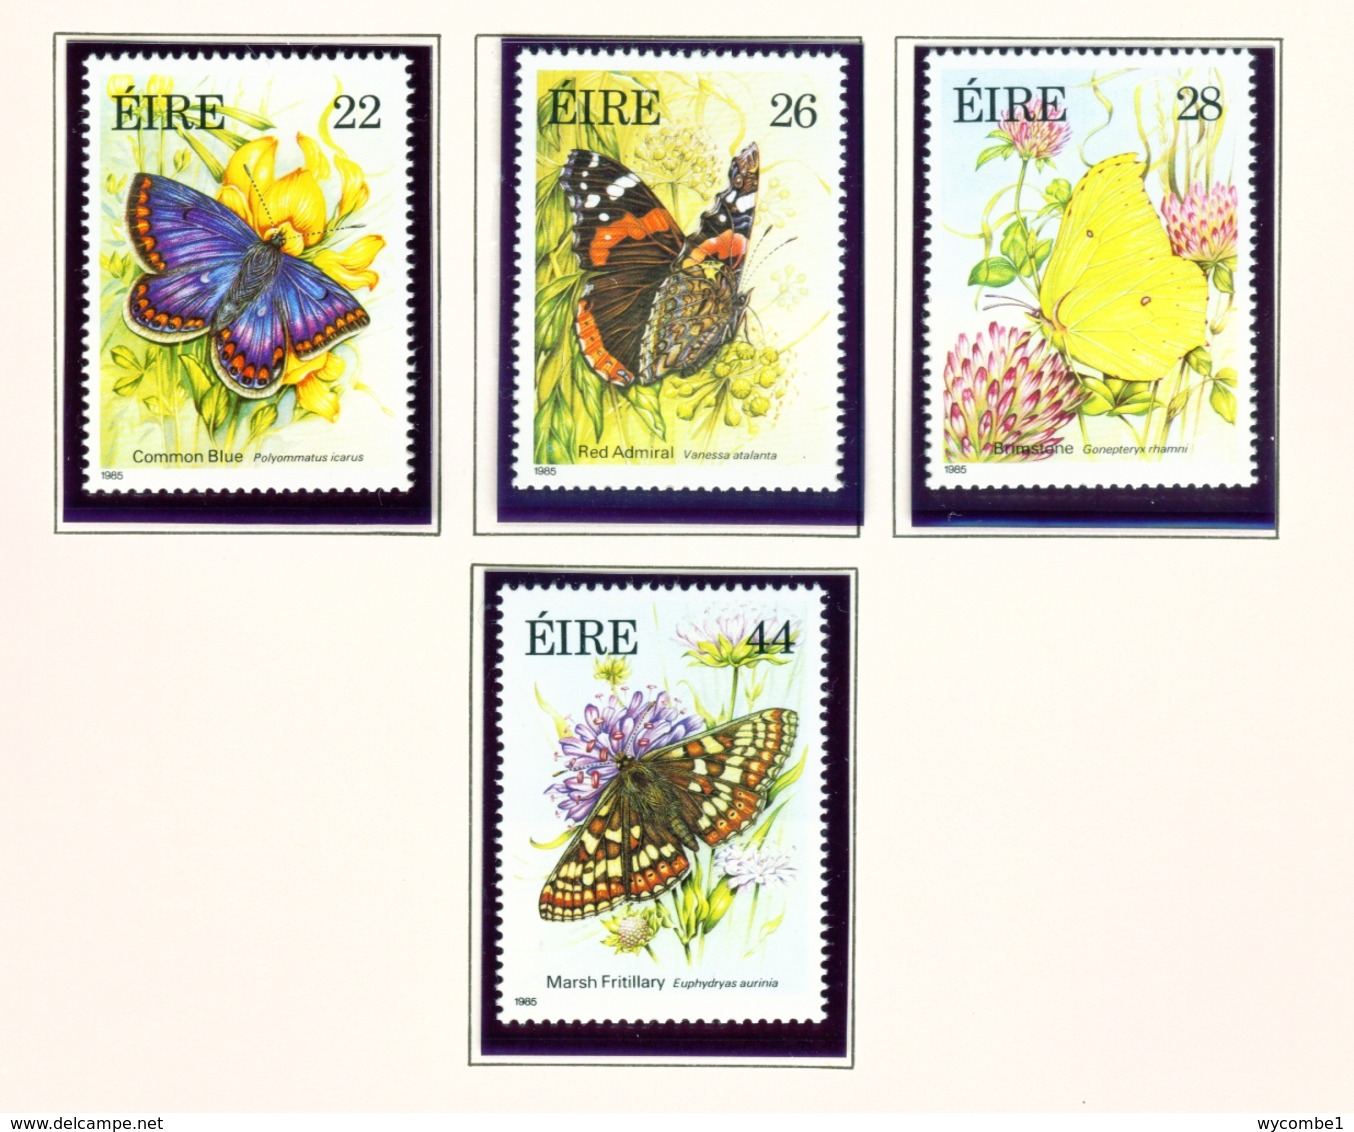 IRELAND  -  1985 Butterflies Set  Unmounted/Never Hinged Mint - Unused Stamps